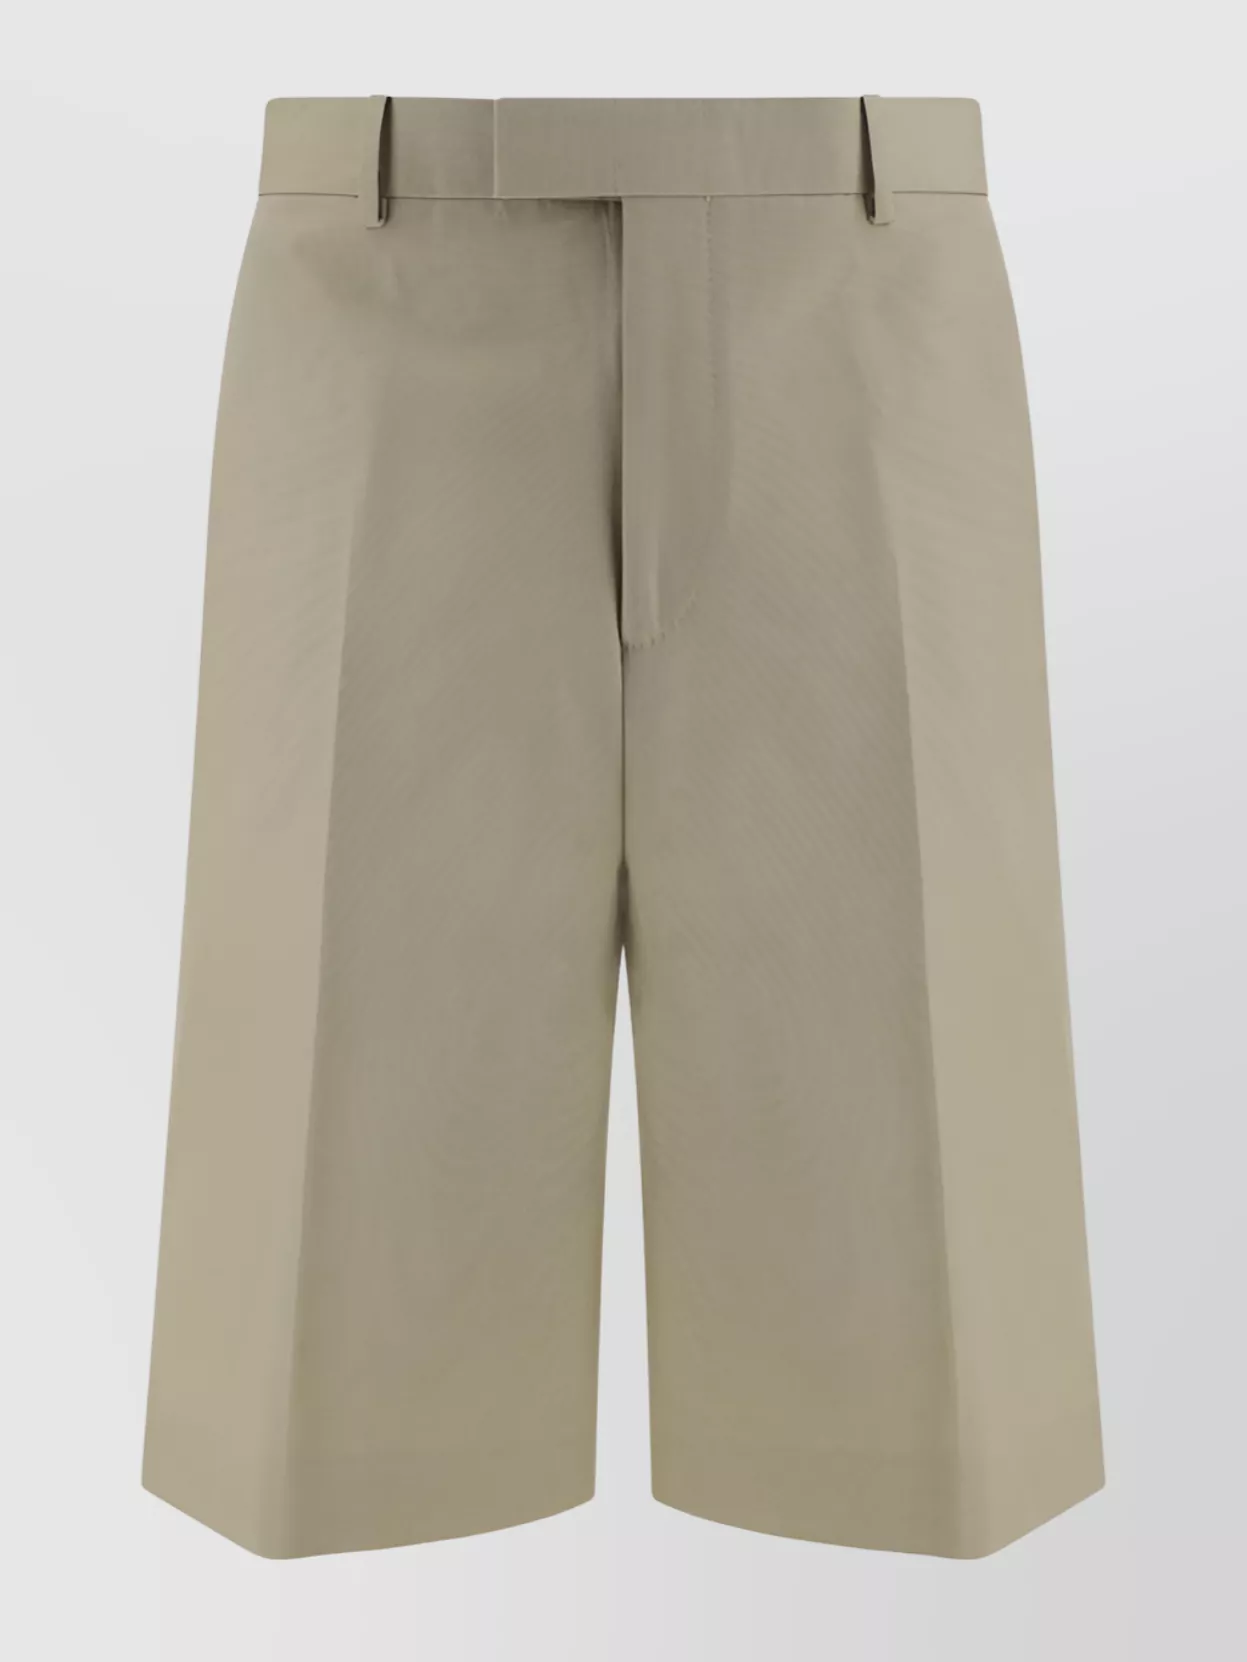 Ferragamo Tailored Monochrome Pleated Shorts Pockets